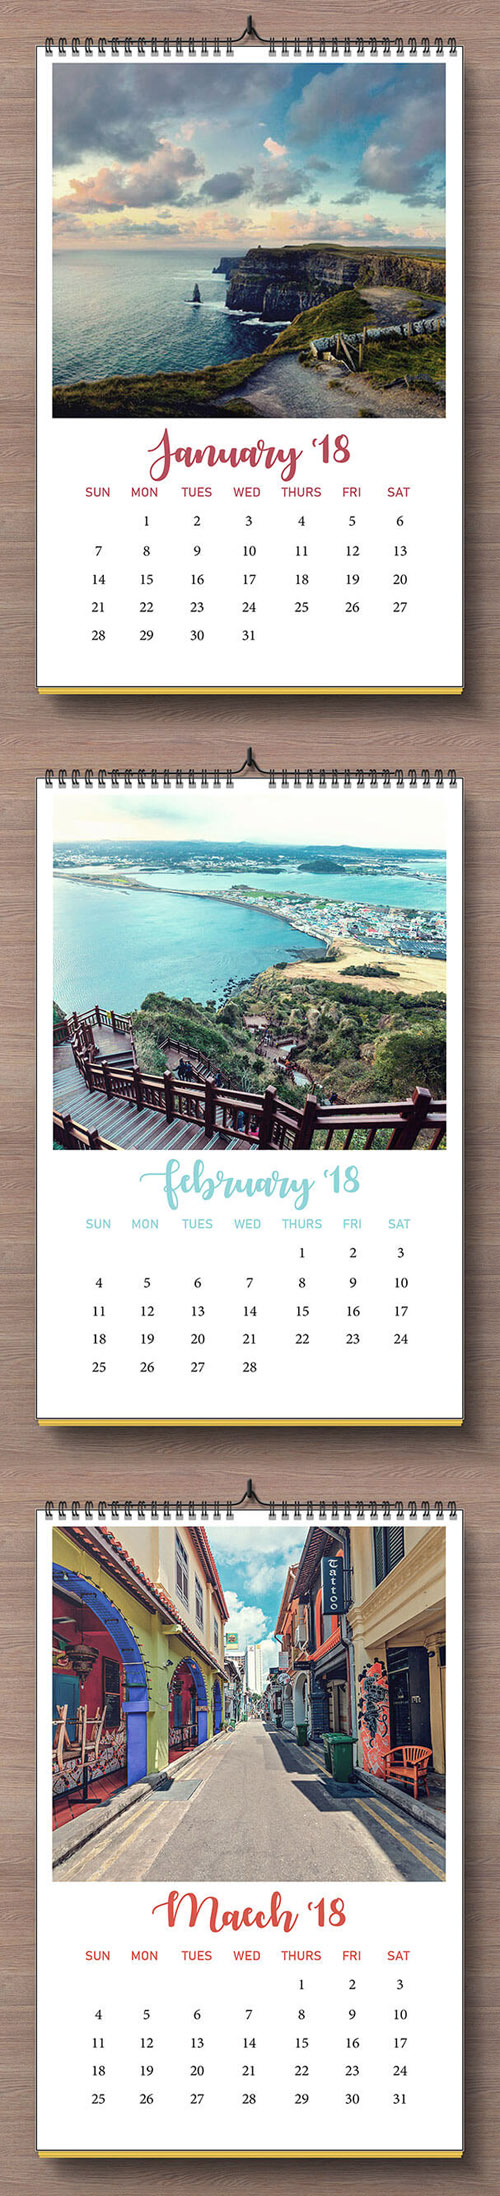 Printable 2018 Calendar